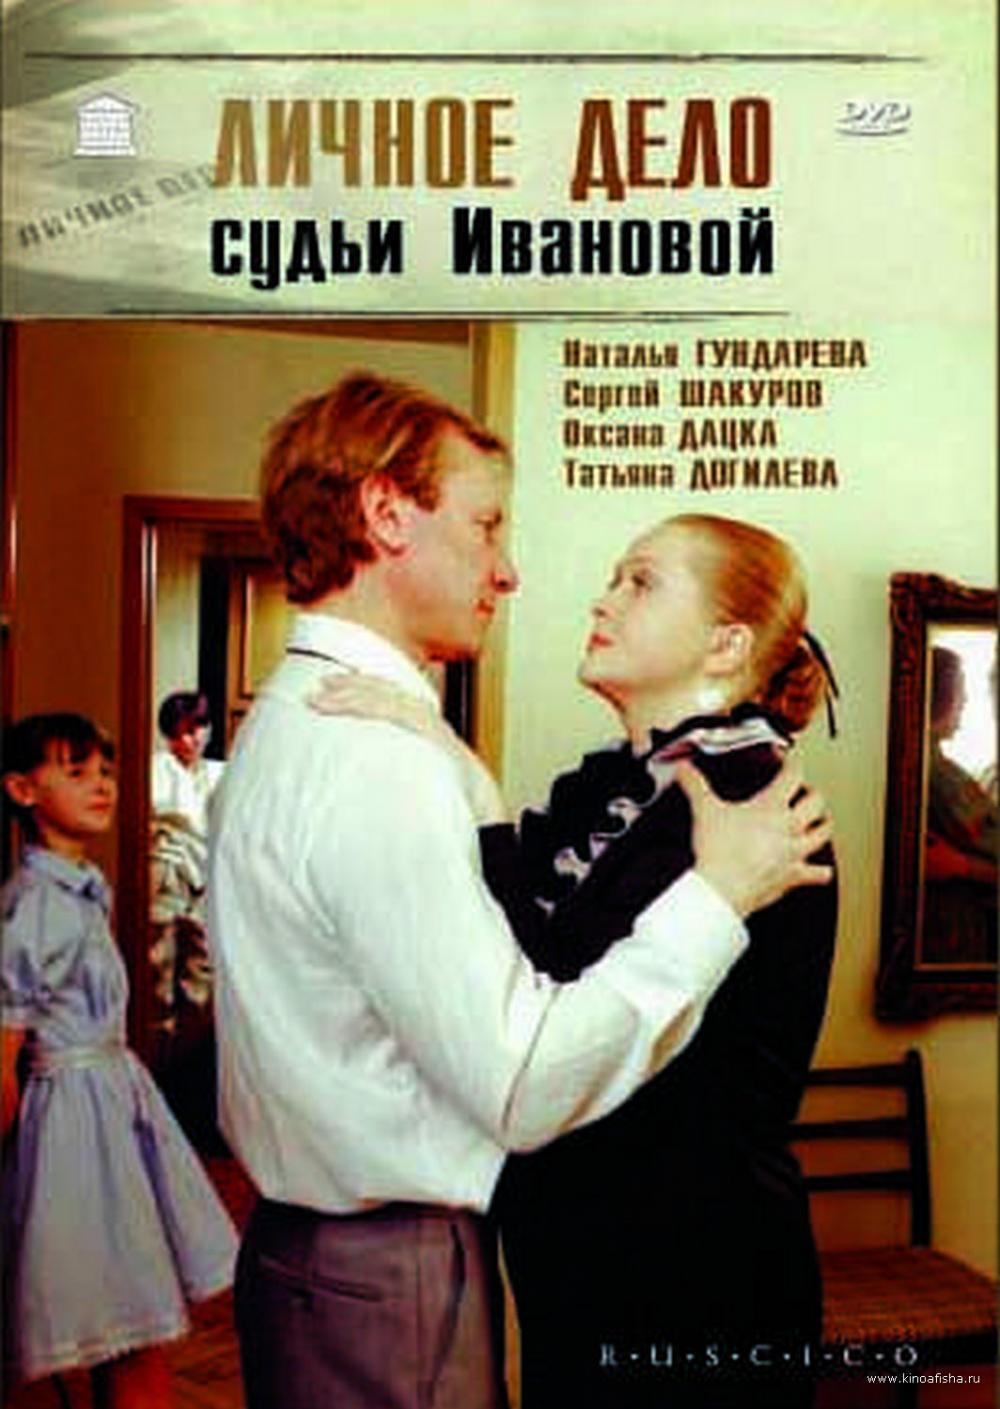     DVD/1986